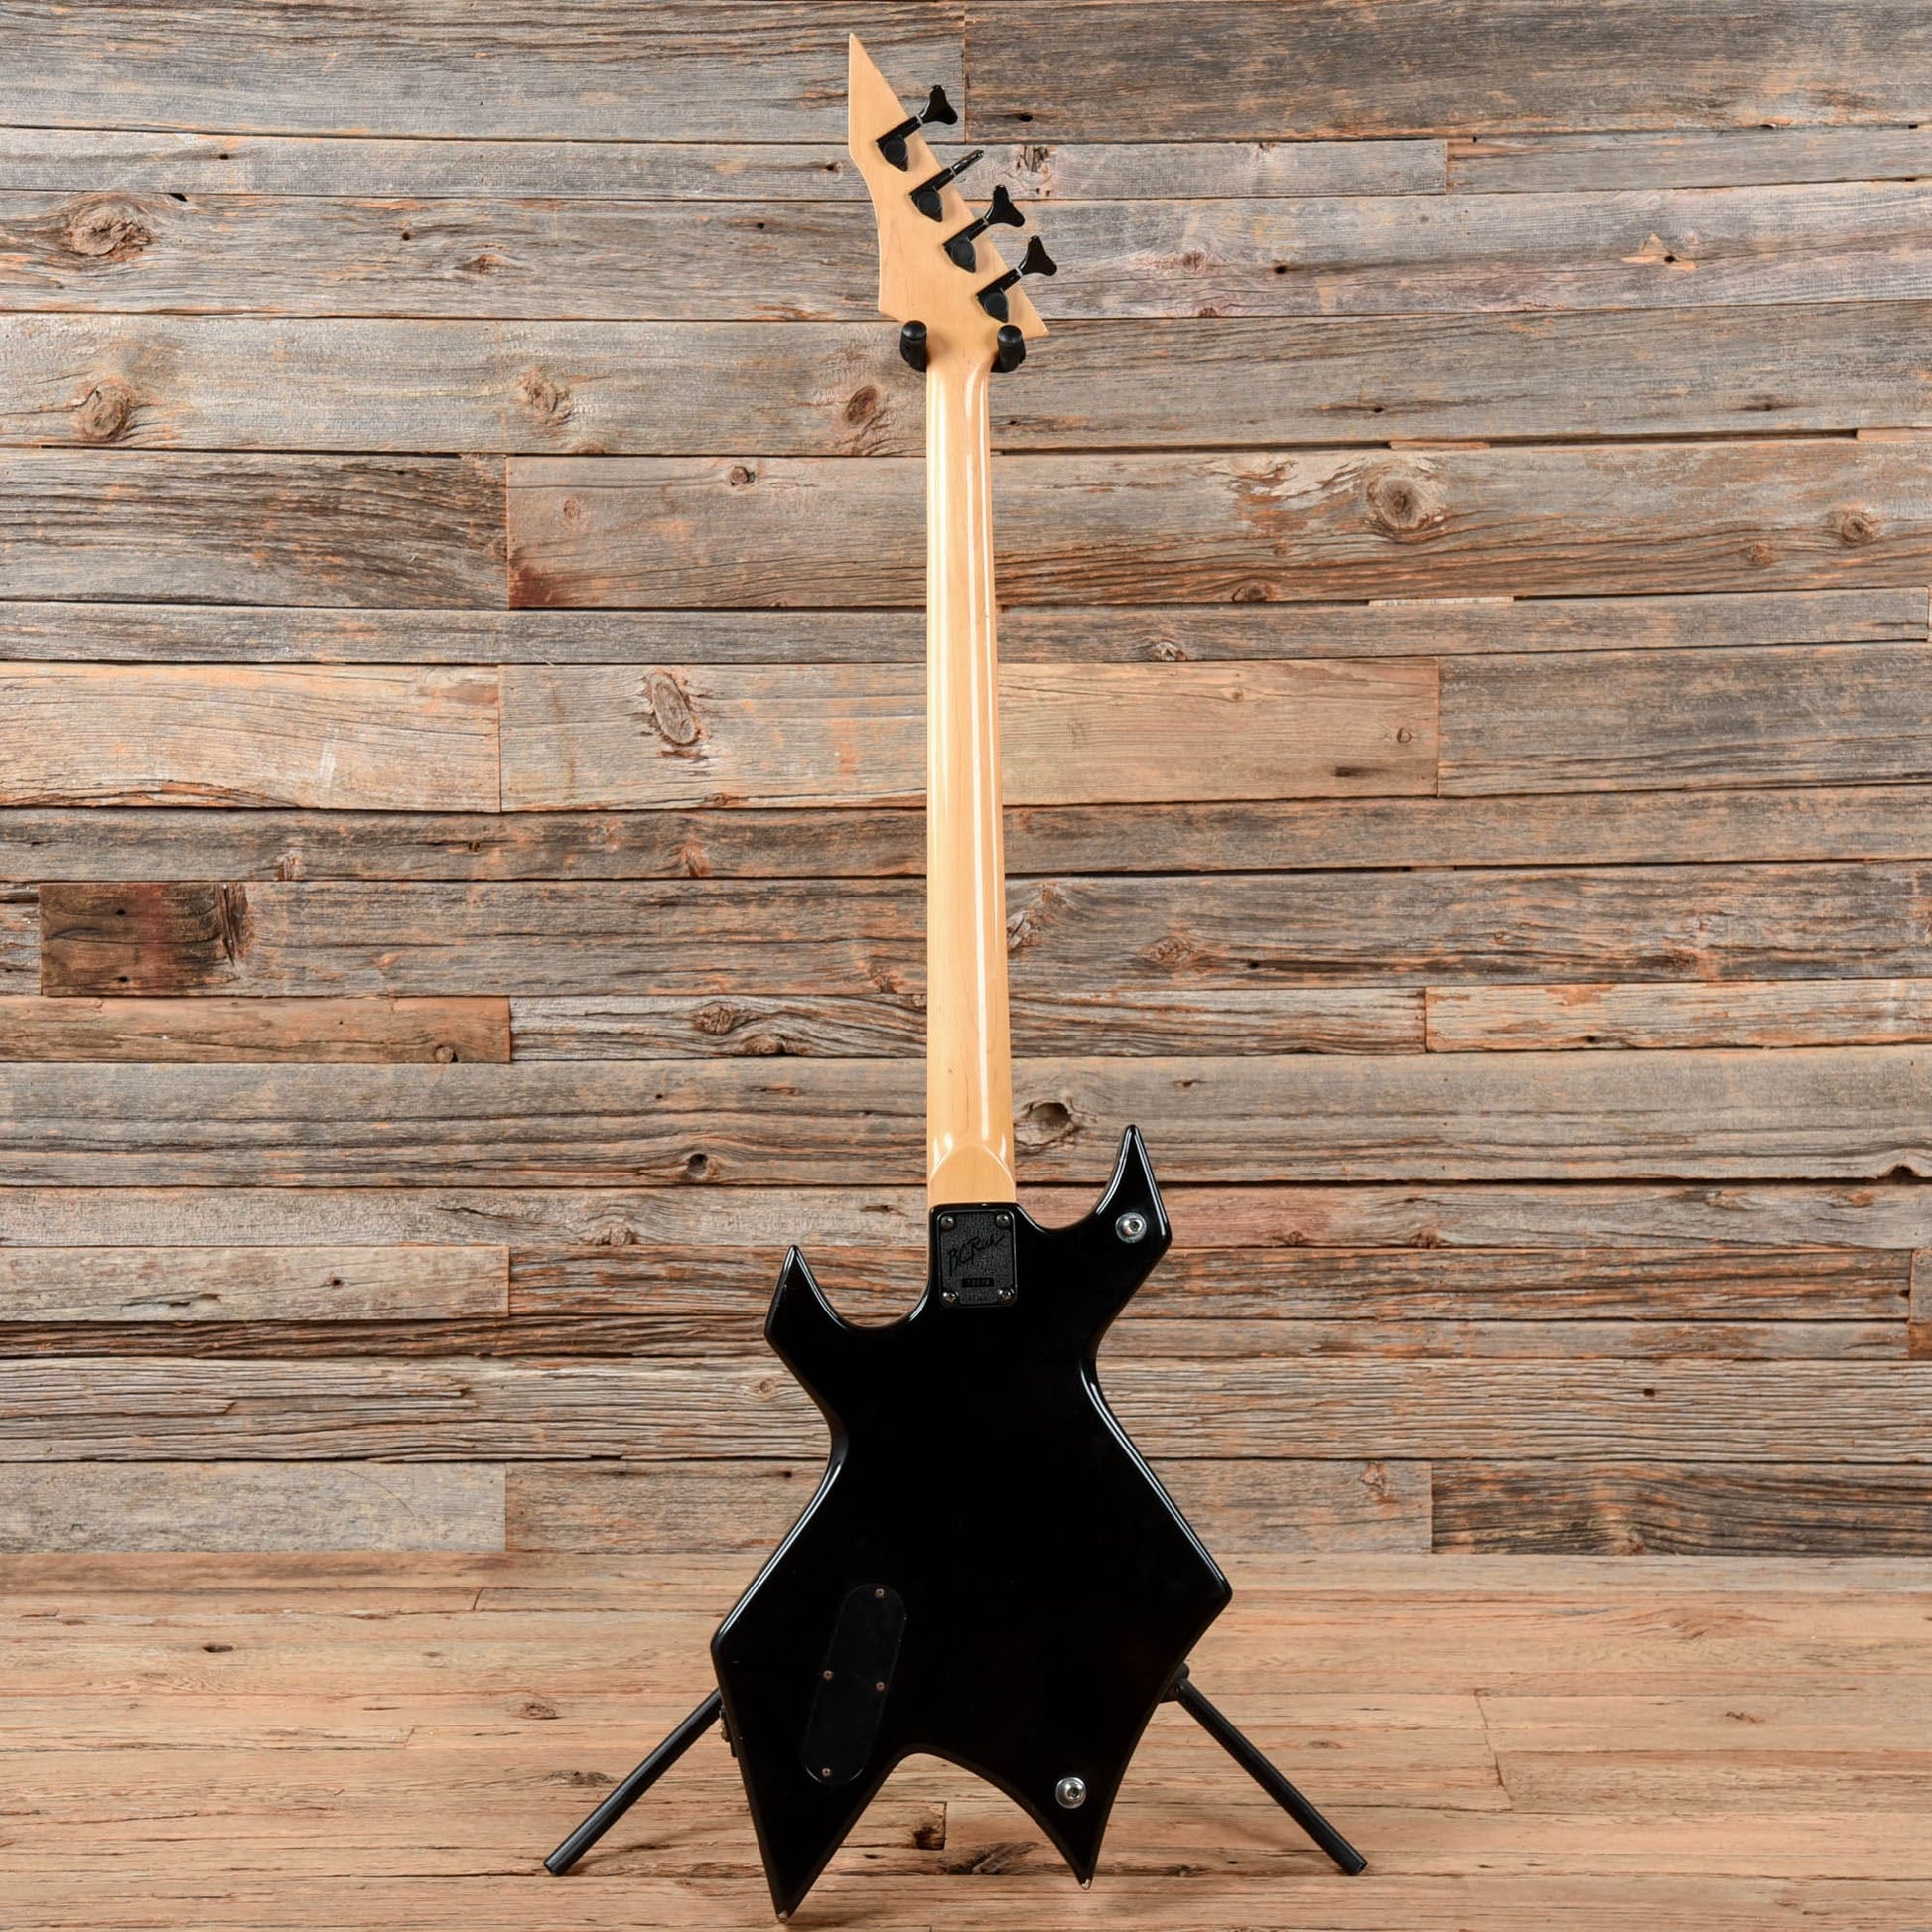 B.C. Rich Warlock Bass Purple Burst Bass Guitars / 4-String